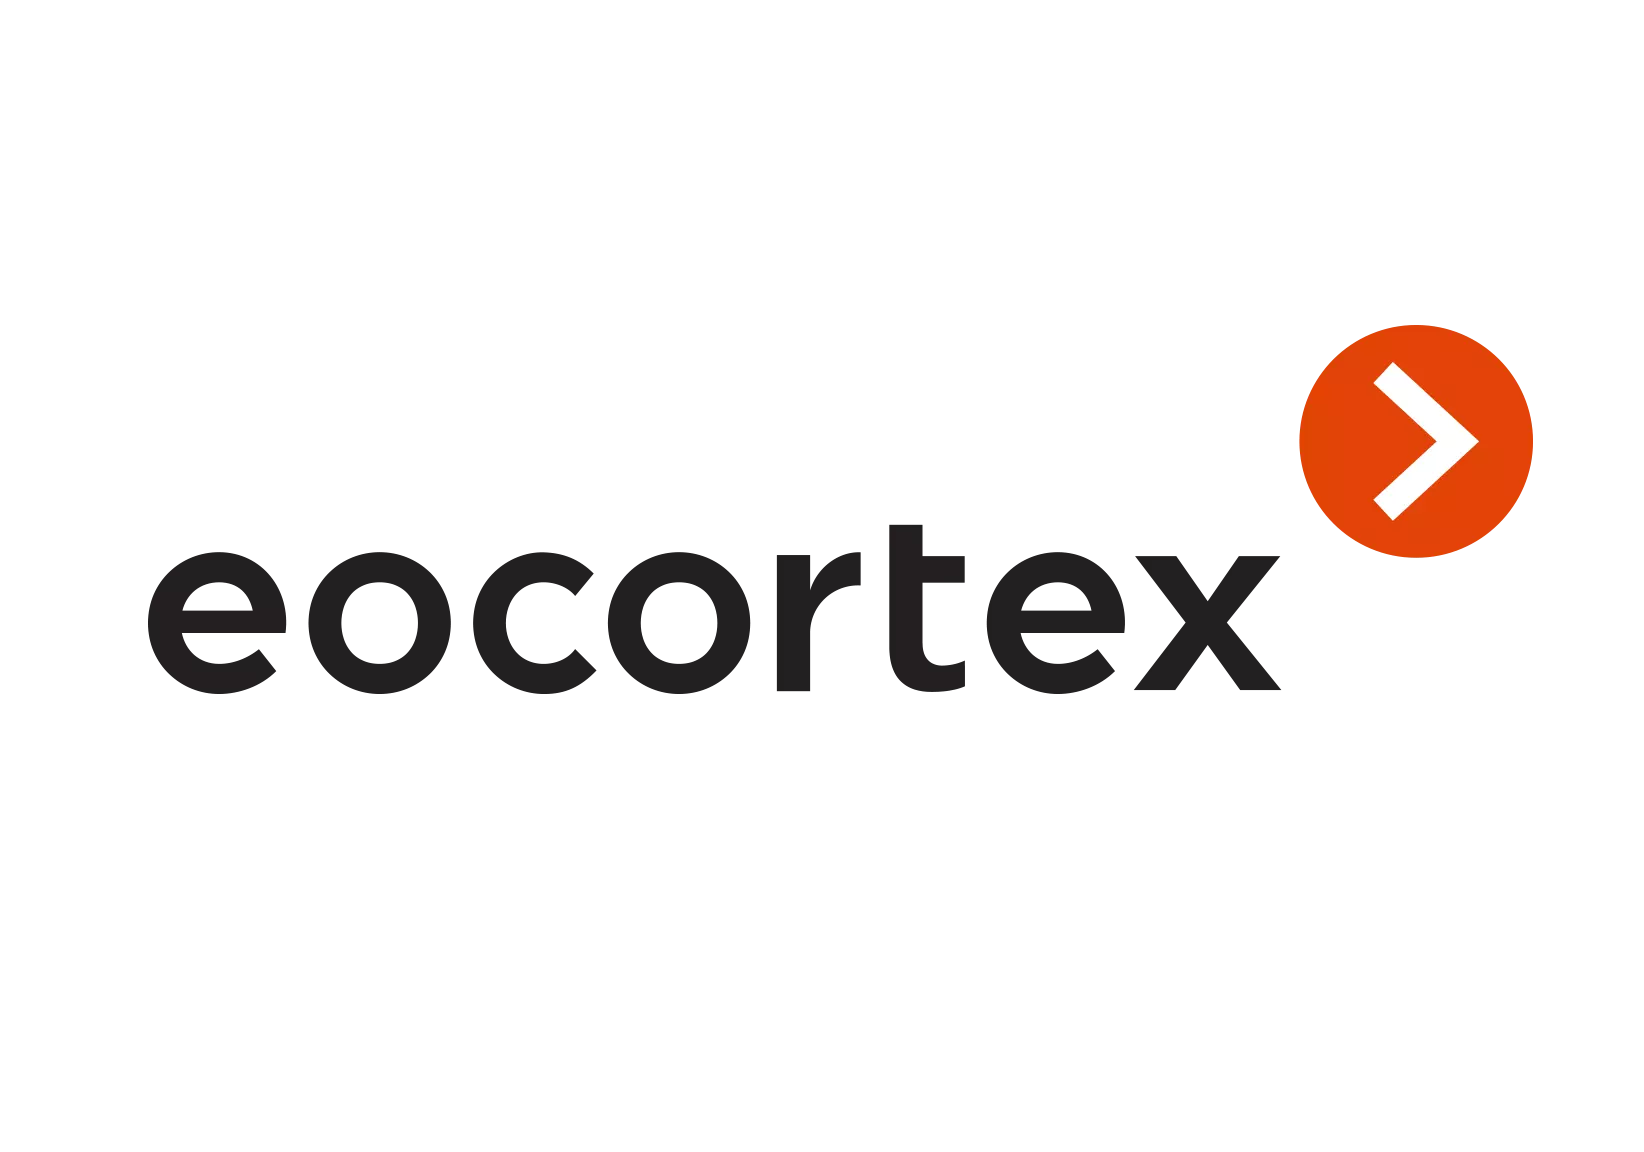 Eocortex logo